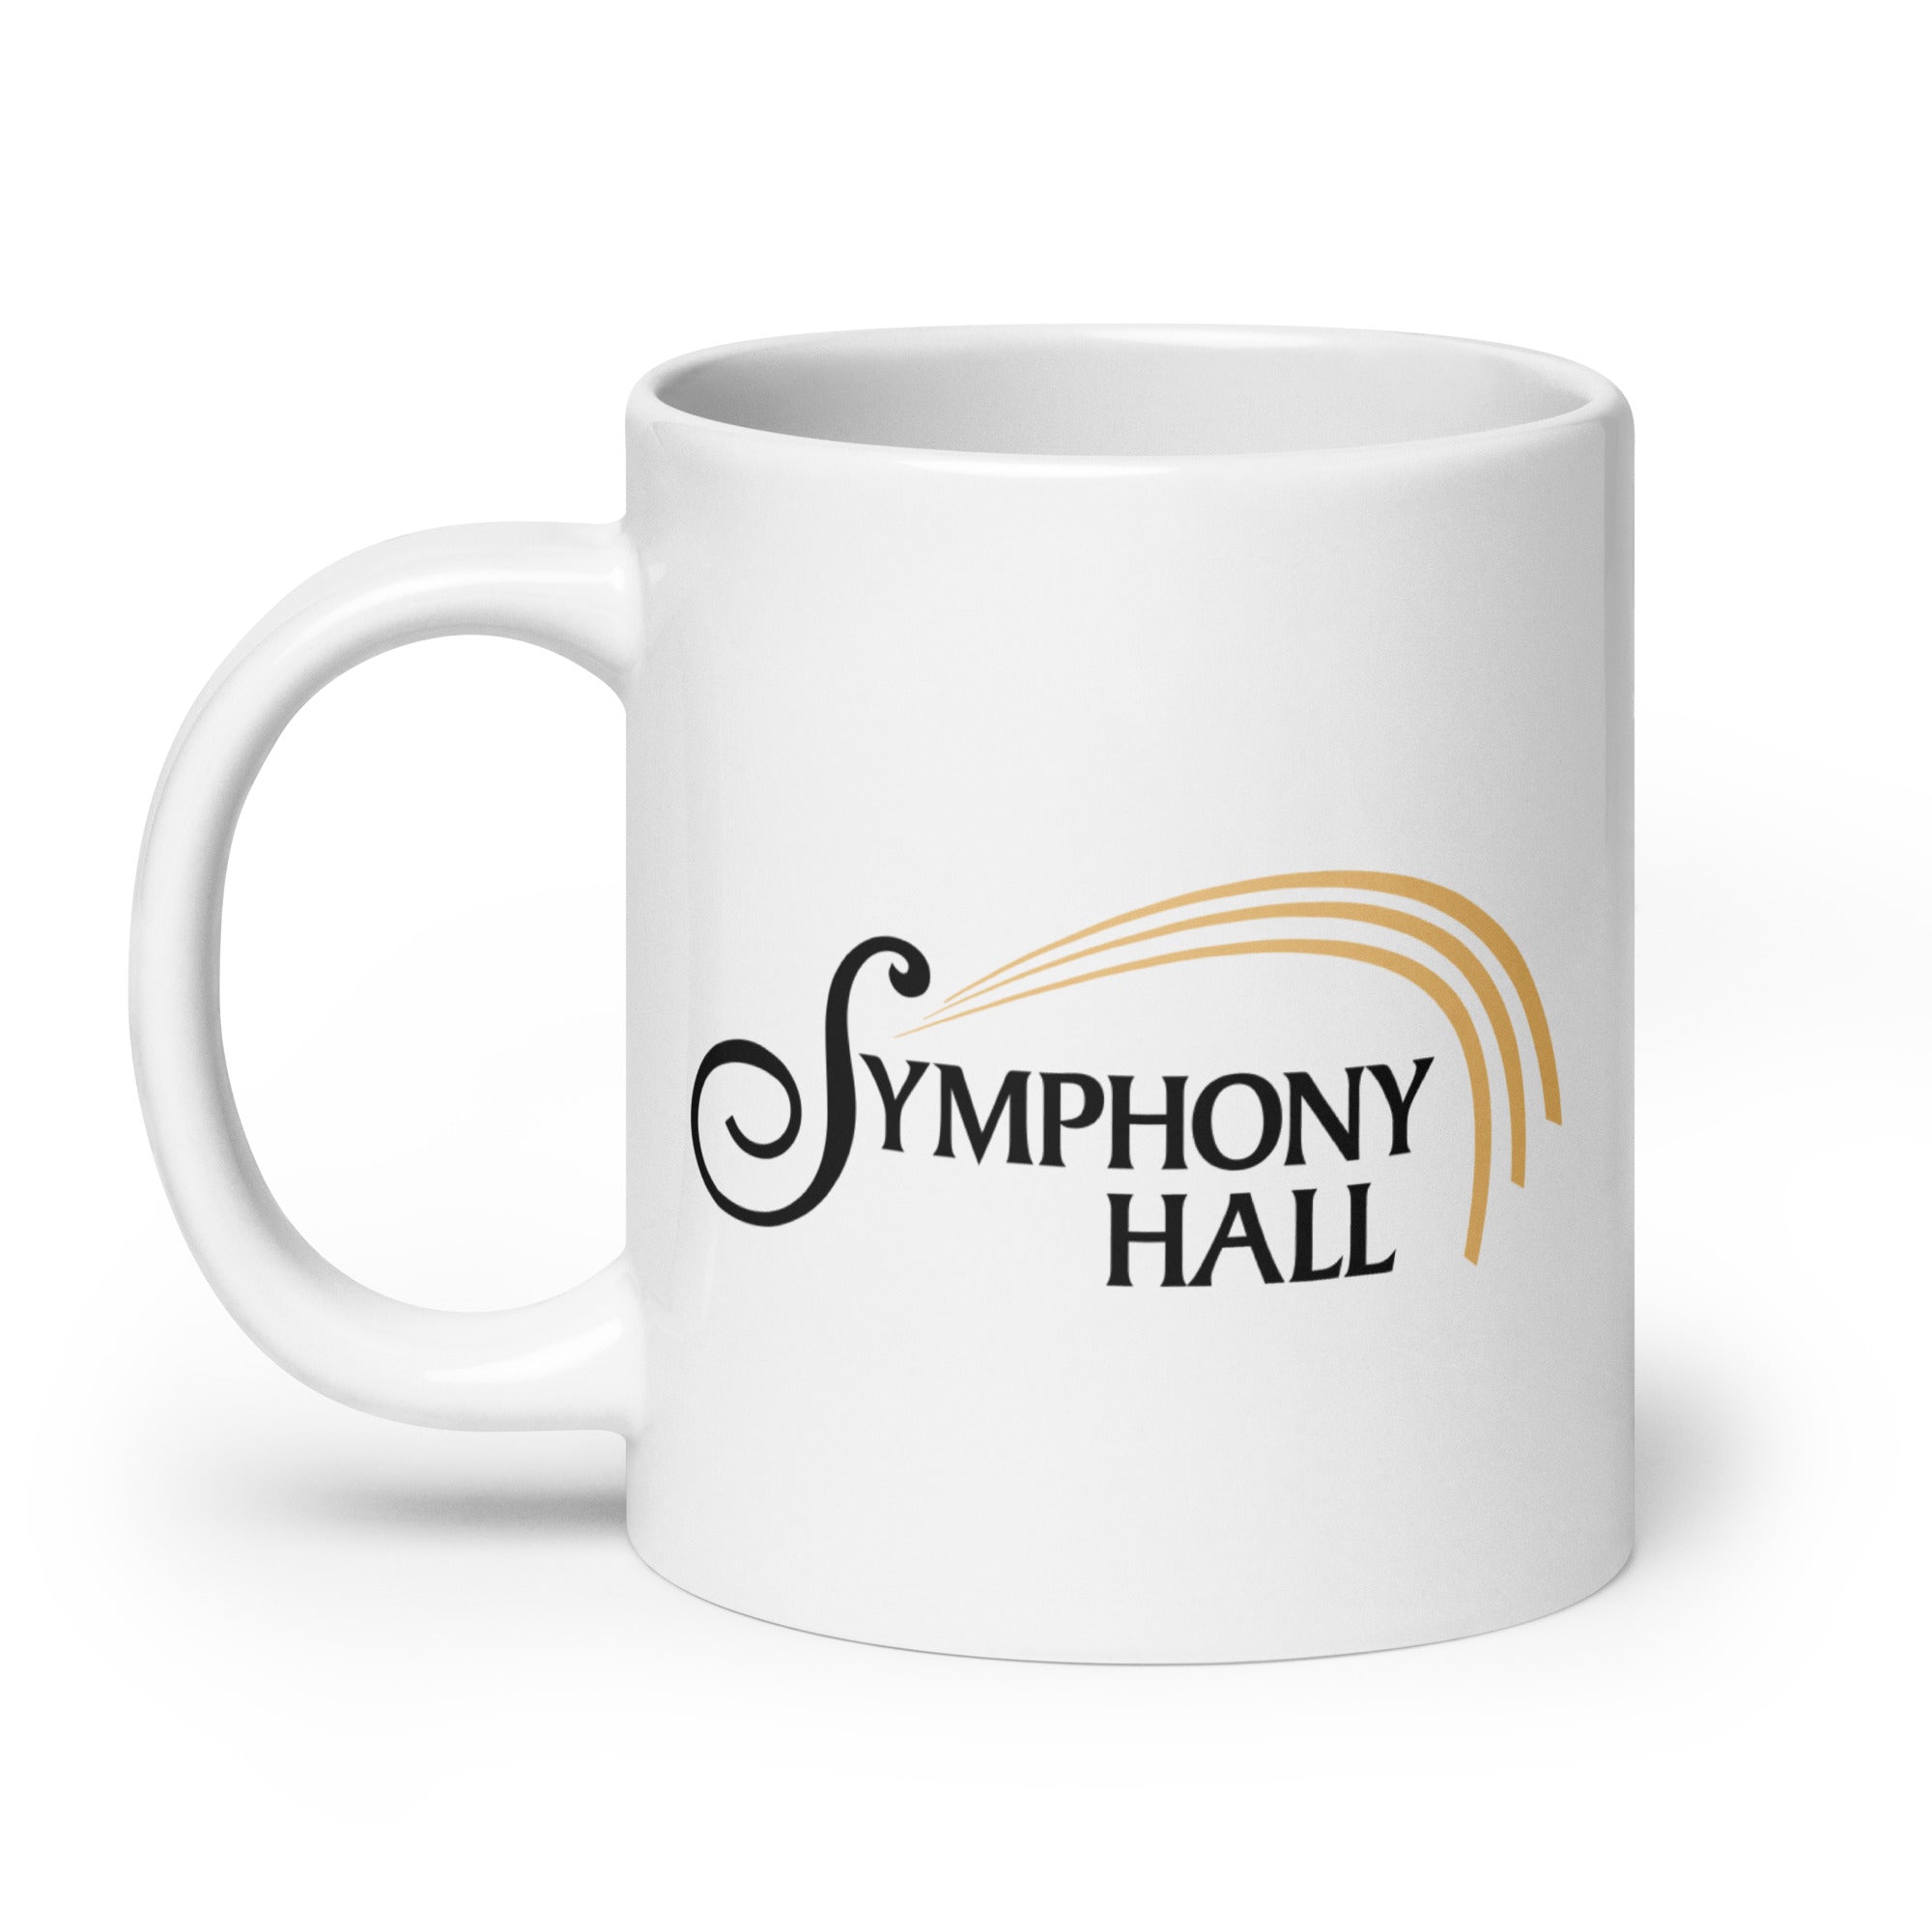 Symphony Hall: Mug